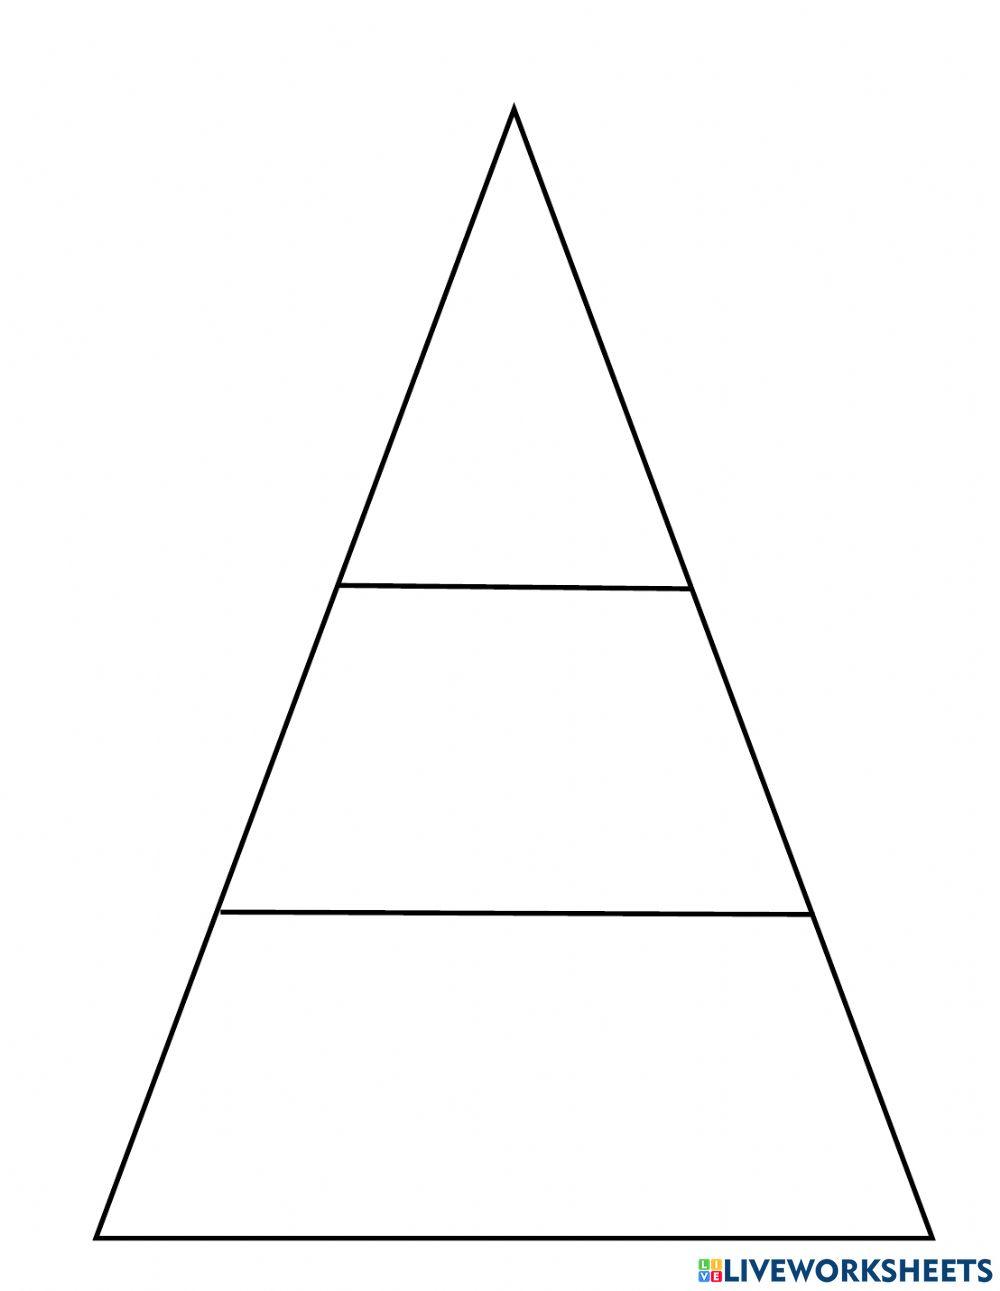 Pyramid Assessment